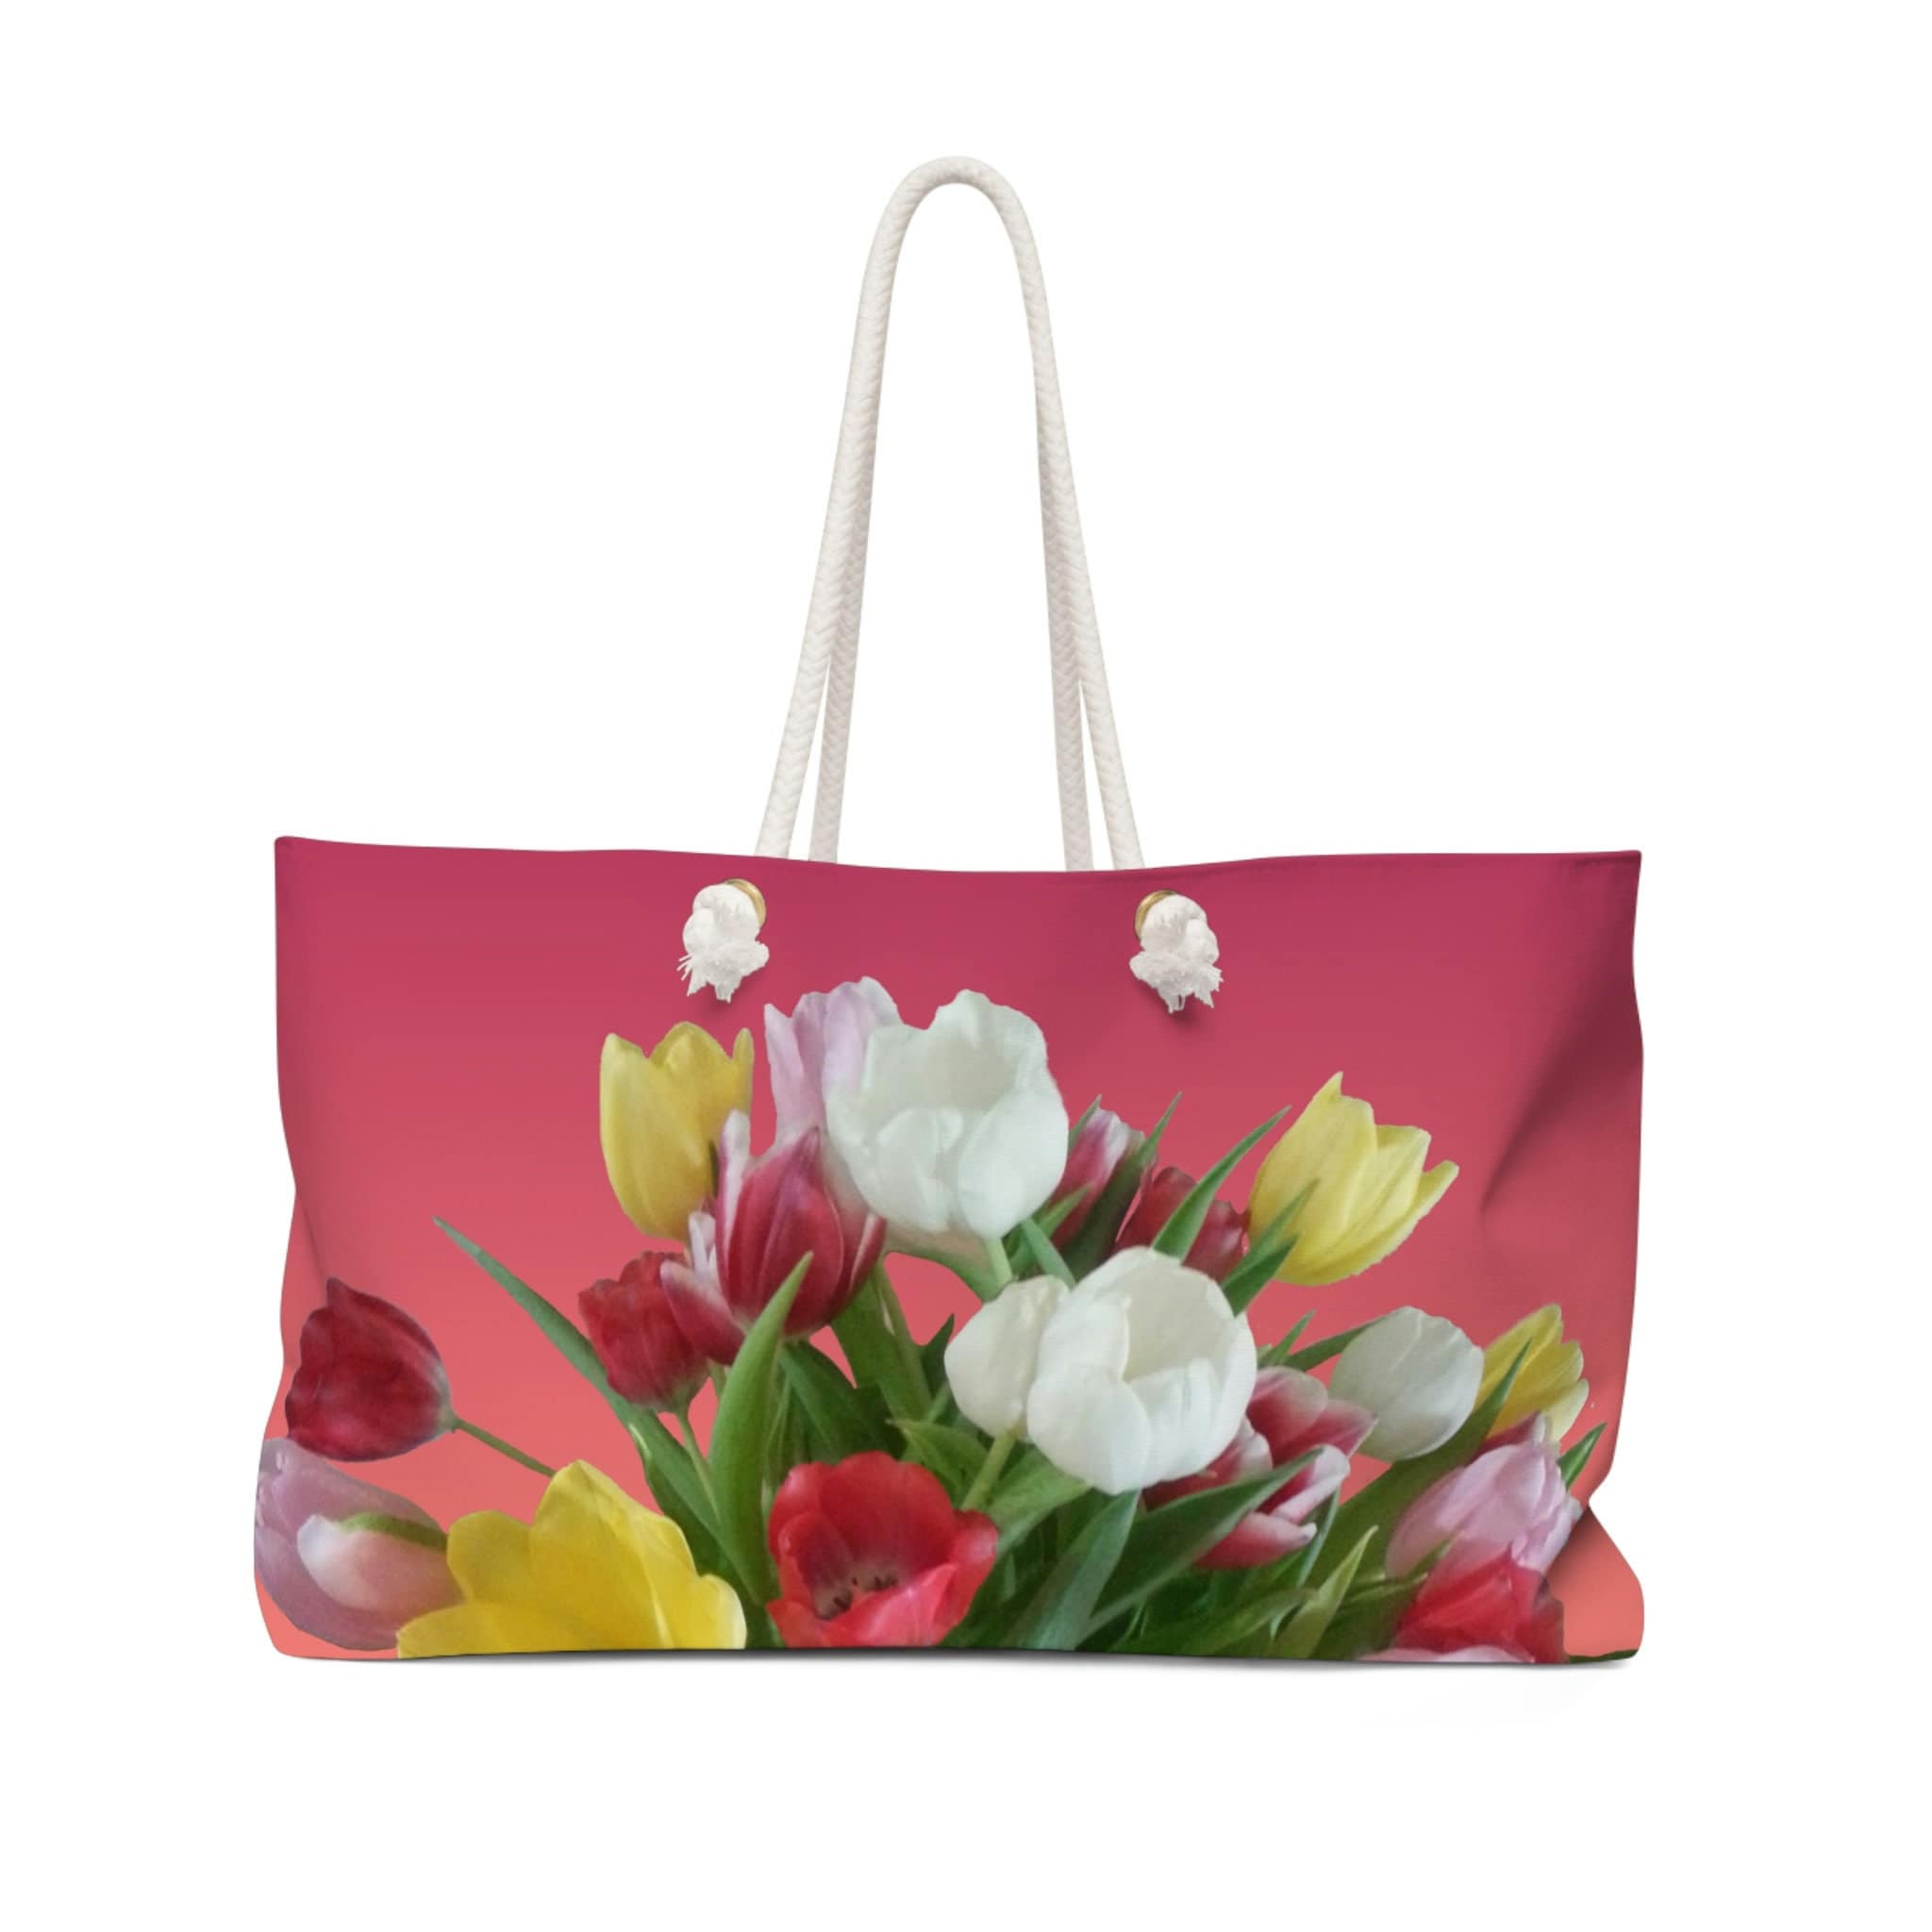  Viva Terry Canvas Tote Bags for Women Handbag Tote